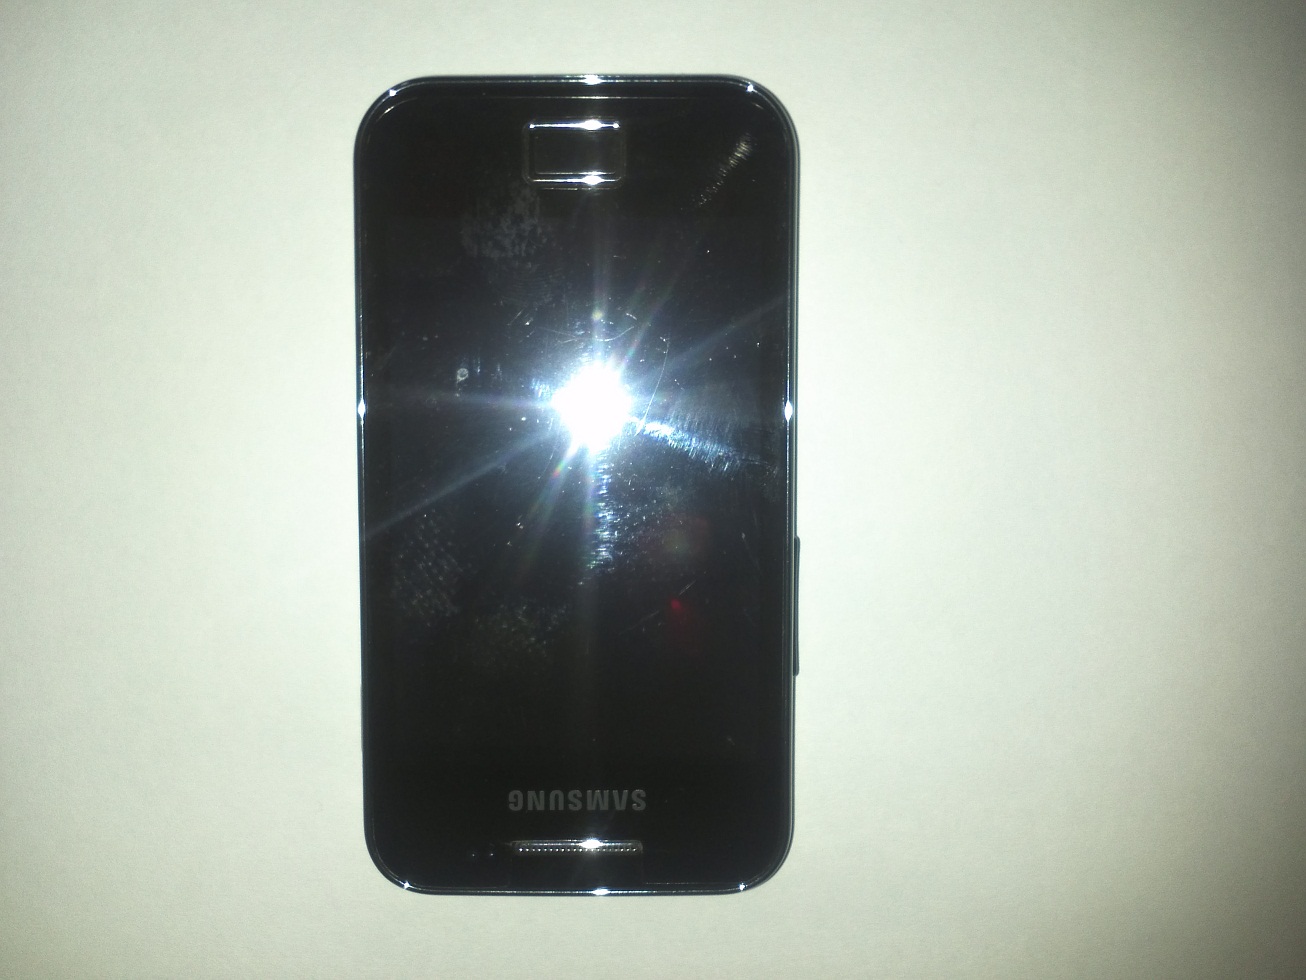 Samsung Galaxy Ace S5830 large image 0